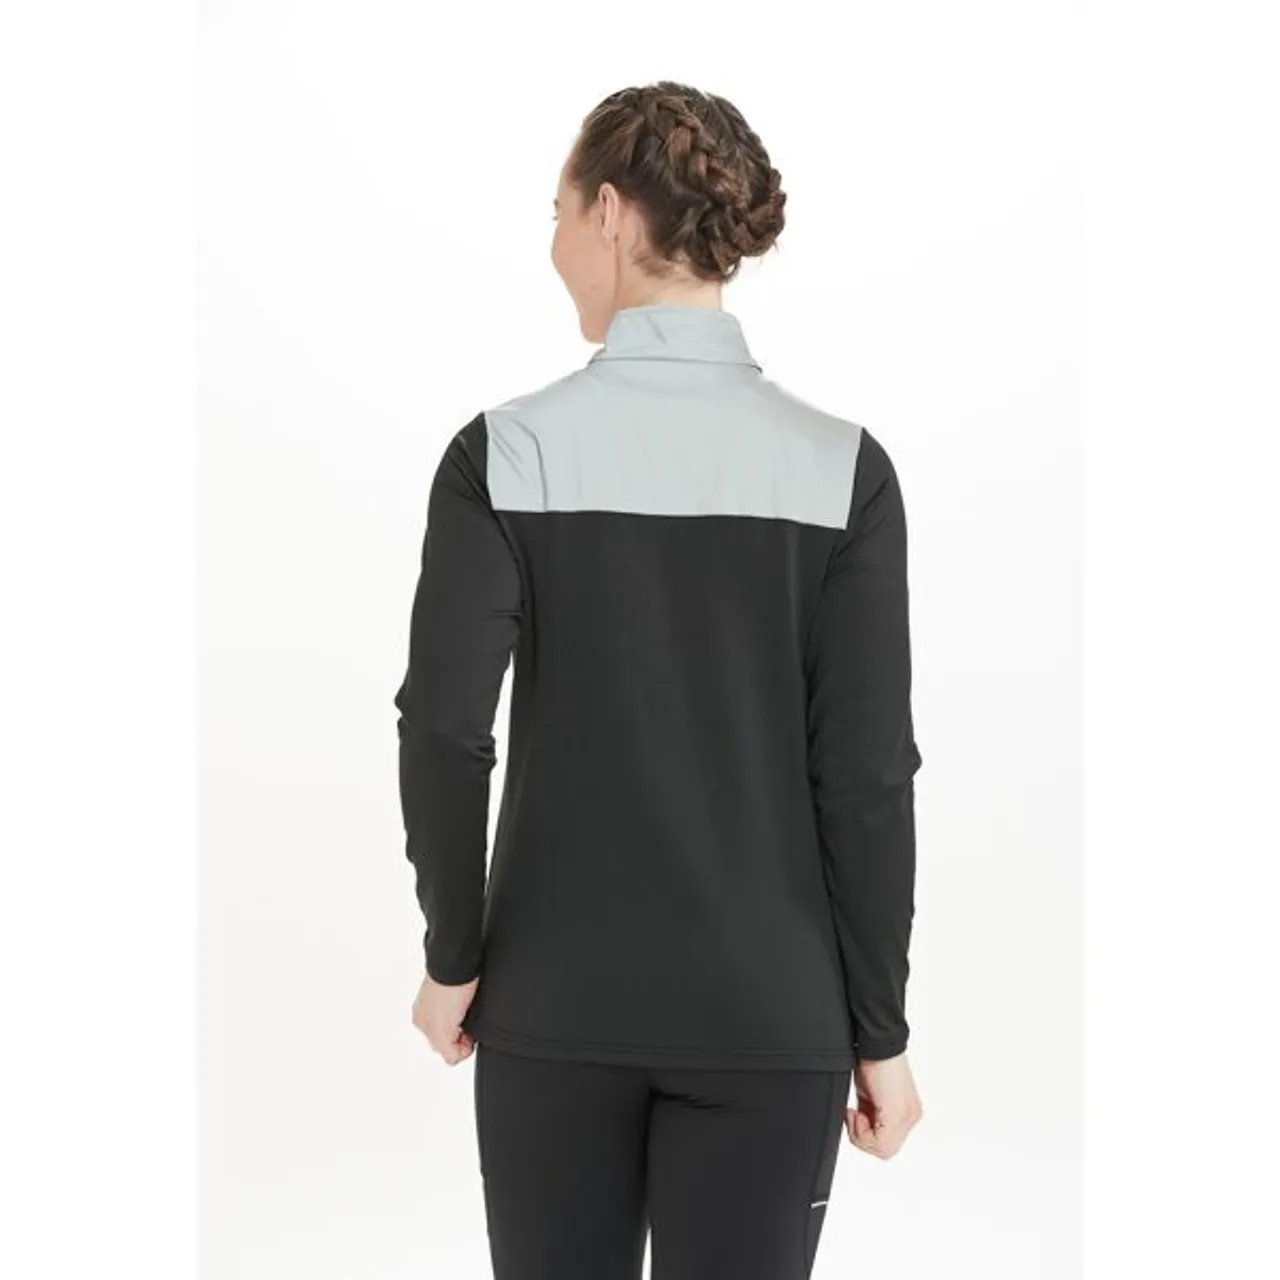 Funktionsshirt ENDURANCE "Tusina" Gr. 36, silberfarben (schwarz, silberfarben) Herren Shirts Funktionsshirts